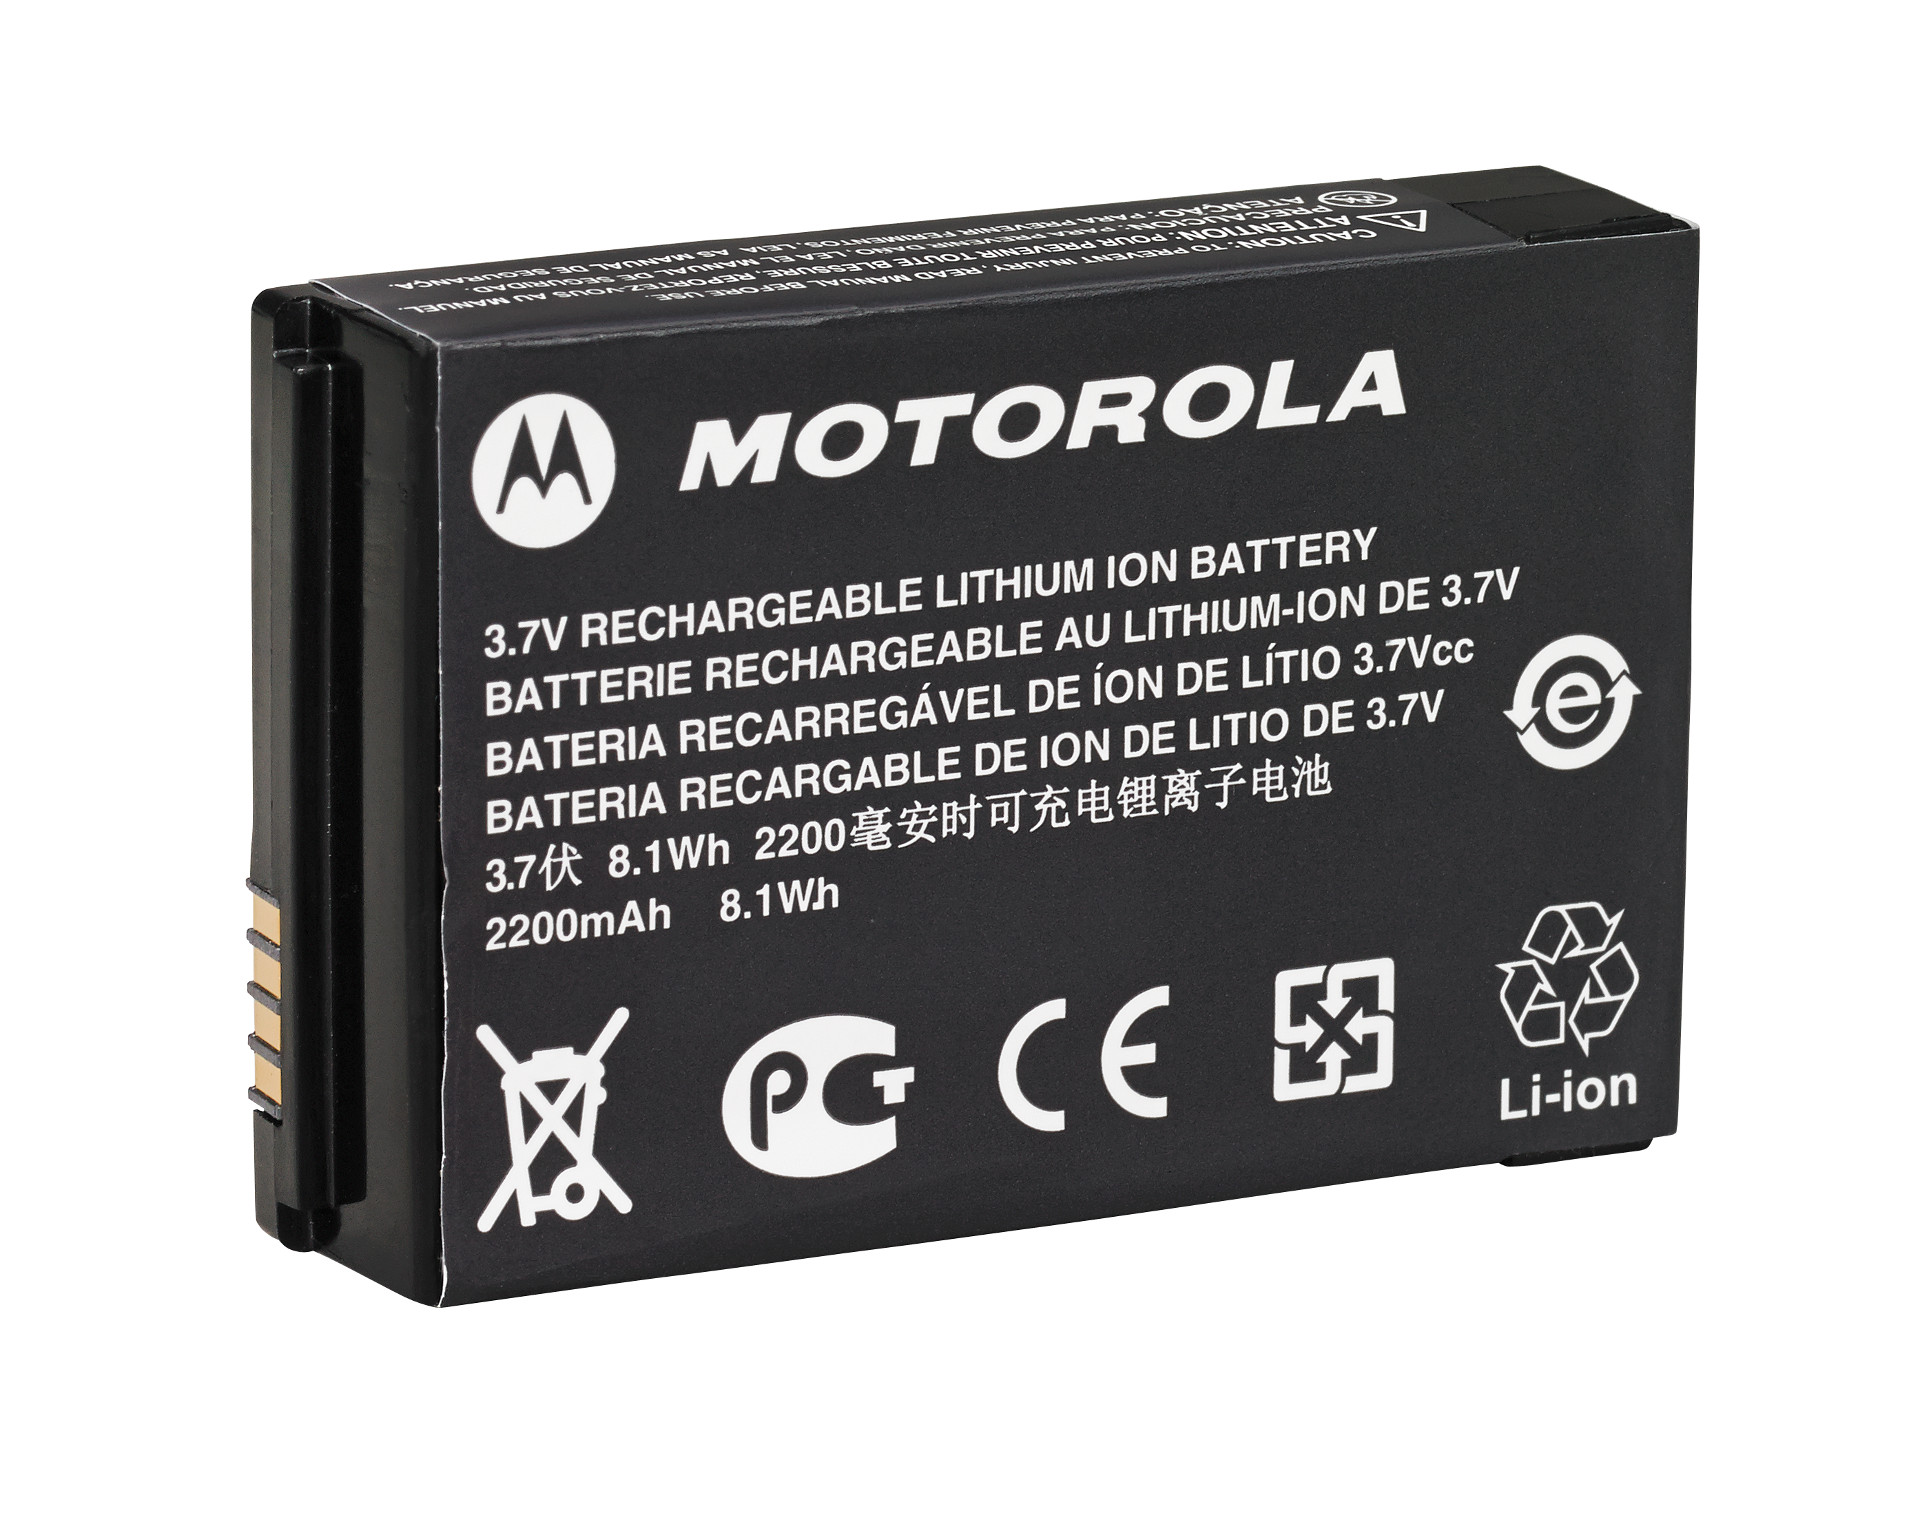 Motorola PMNN4468A